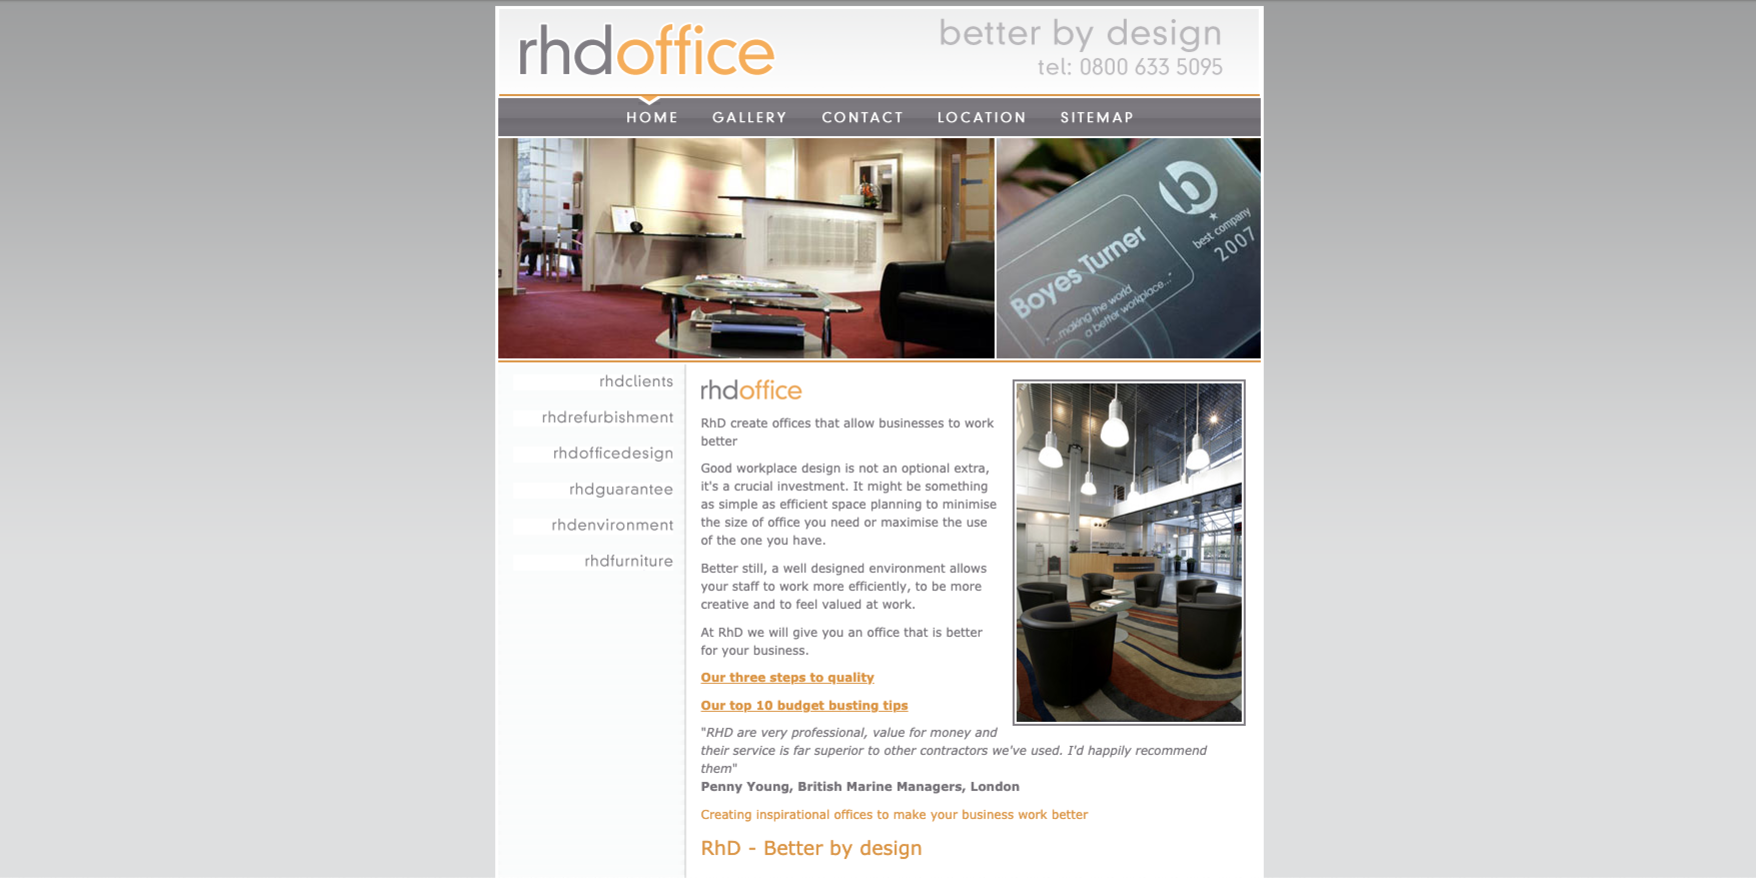 The previous RHD Office website, displayed on desktop